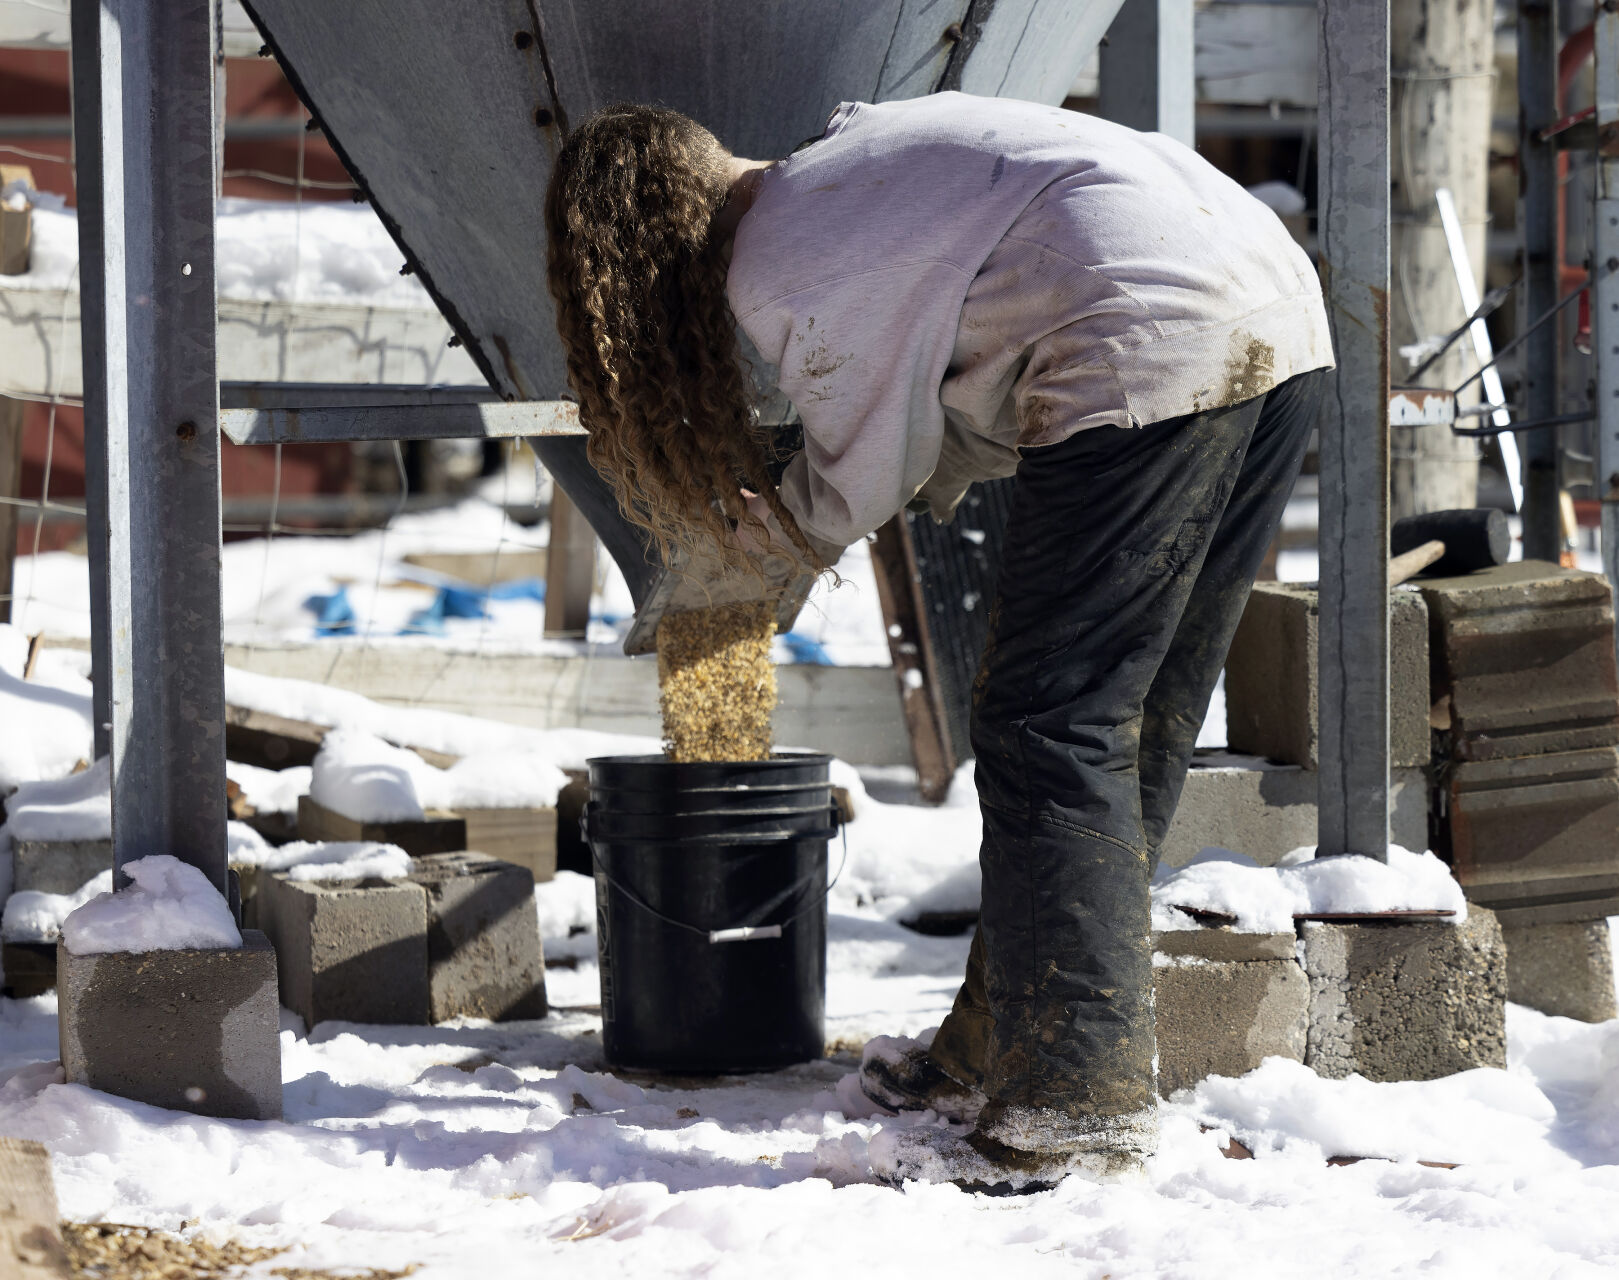 Caroline Kilian, 15, pours feed into a bucket at Oak Hollow Farm in rural Platteville, Wis., on Friday, Feb. 17, 2023.    PHOTO CREDIT: Stephen Gassman
Telegraph Herald